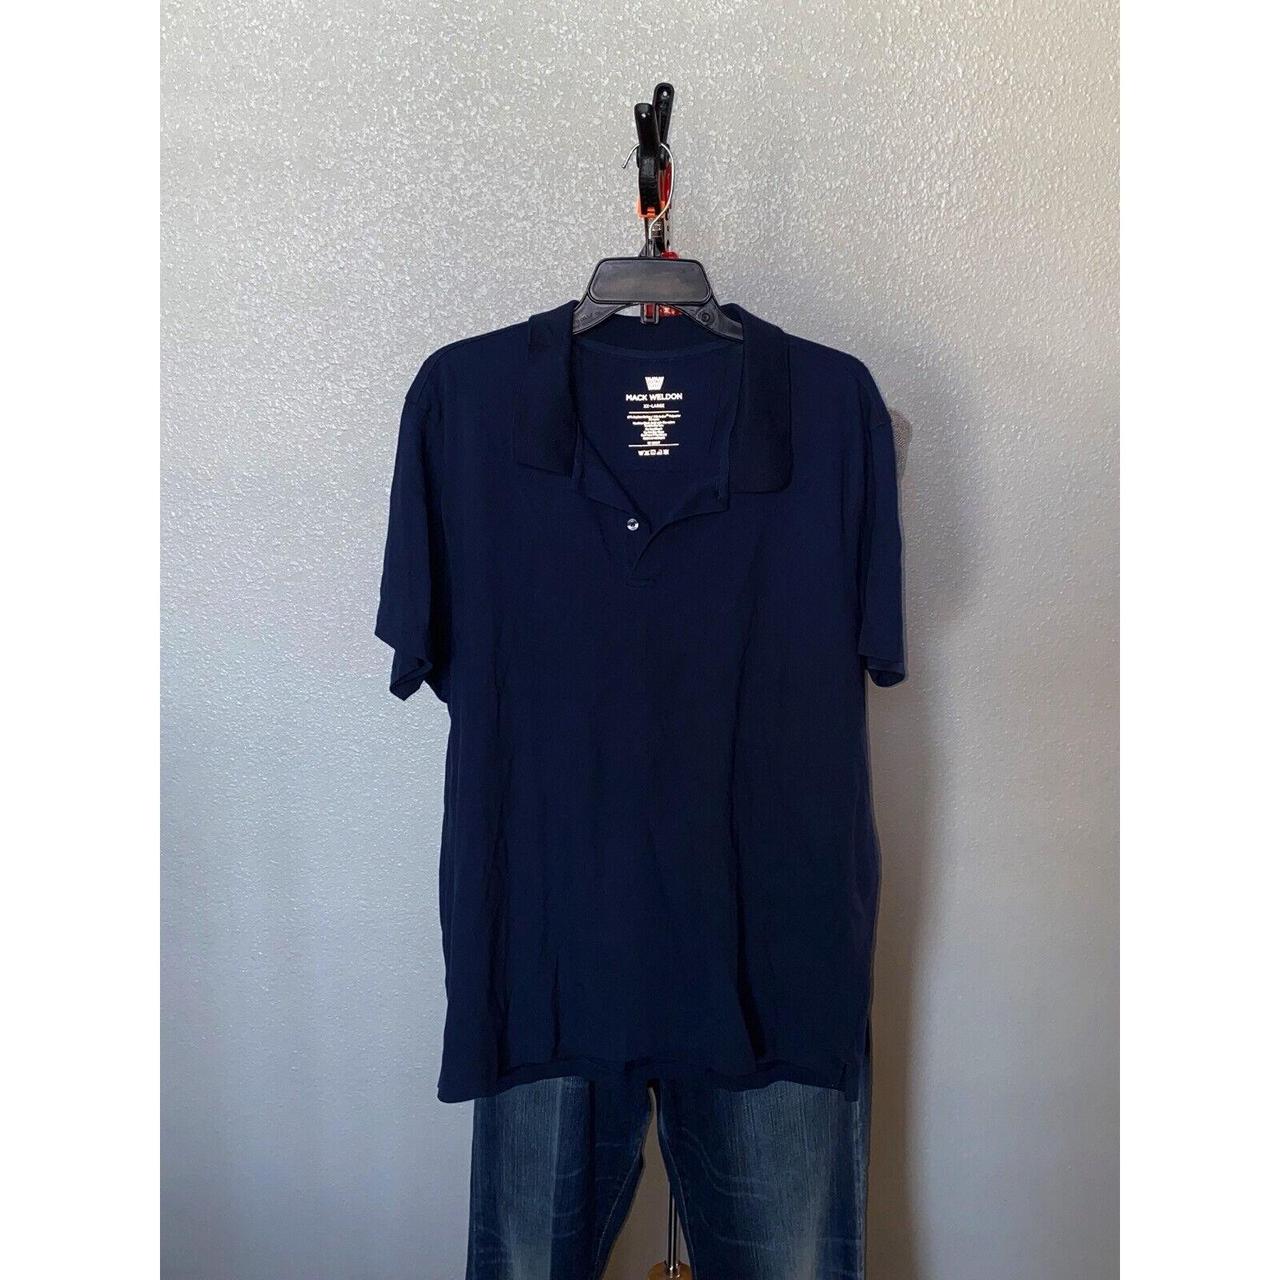 Mack Weldon Men's Blue and Navy Polo-shirts (2)